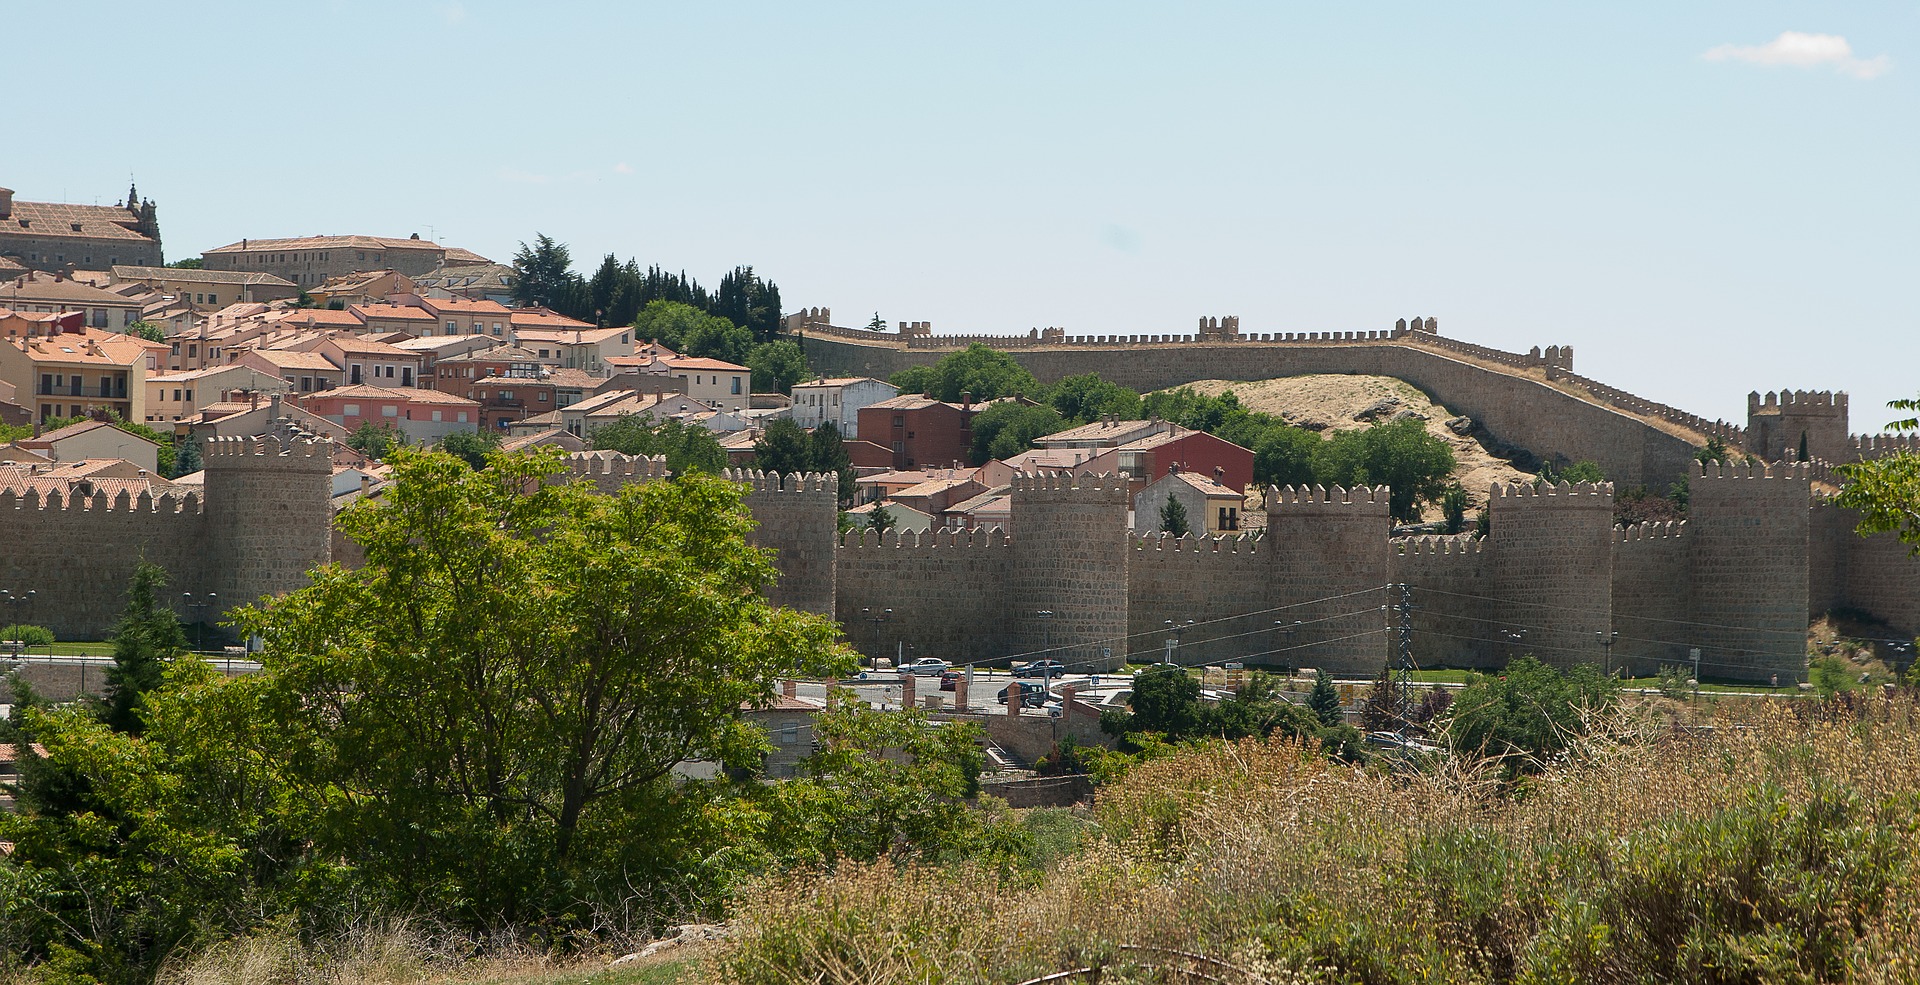 Restaurantes en Ávila centro dentro de la muralla